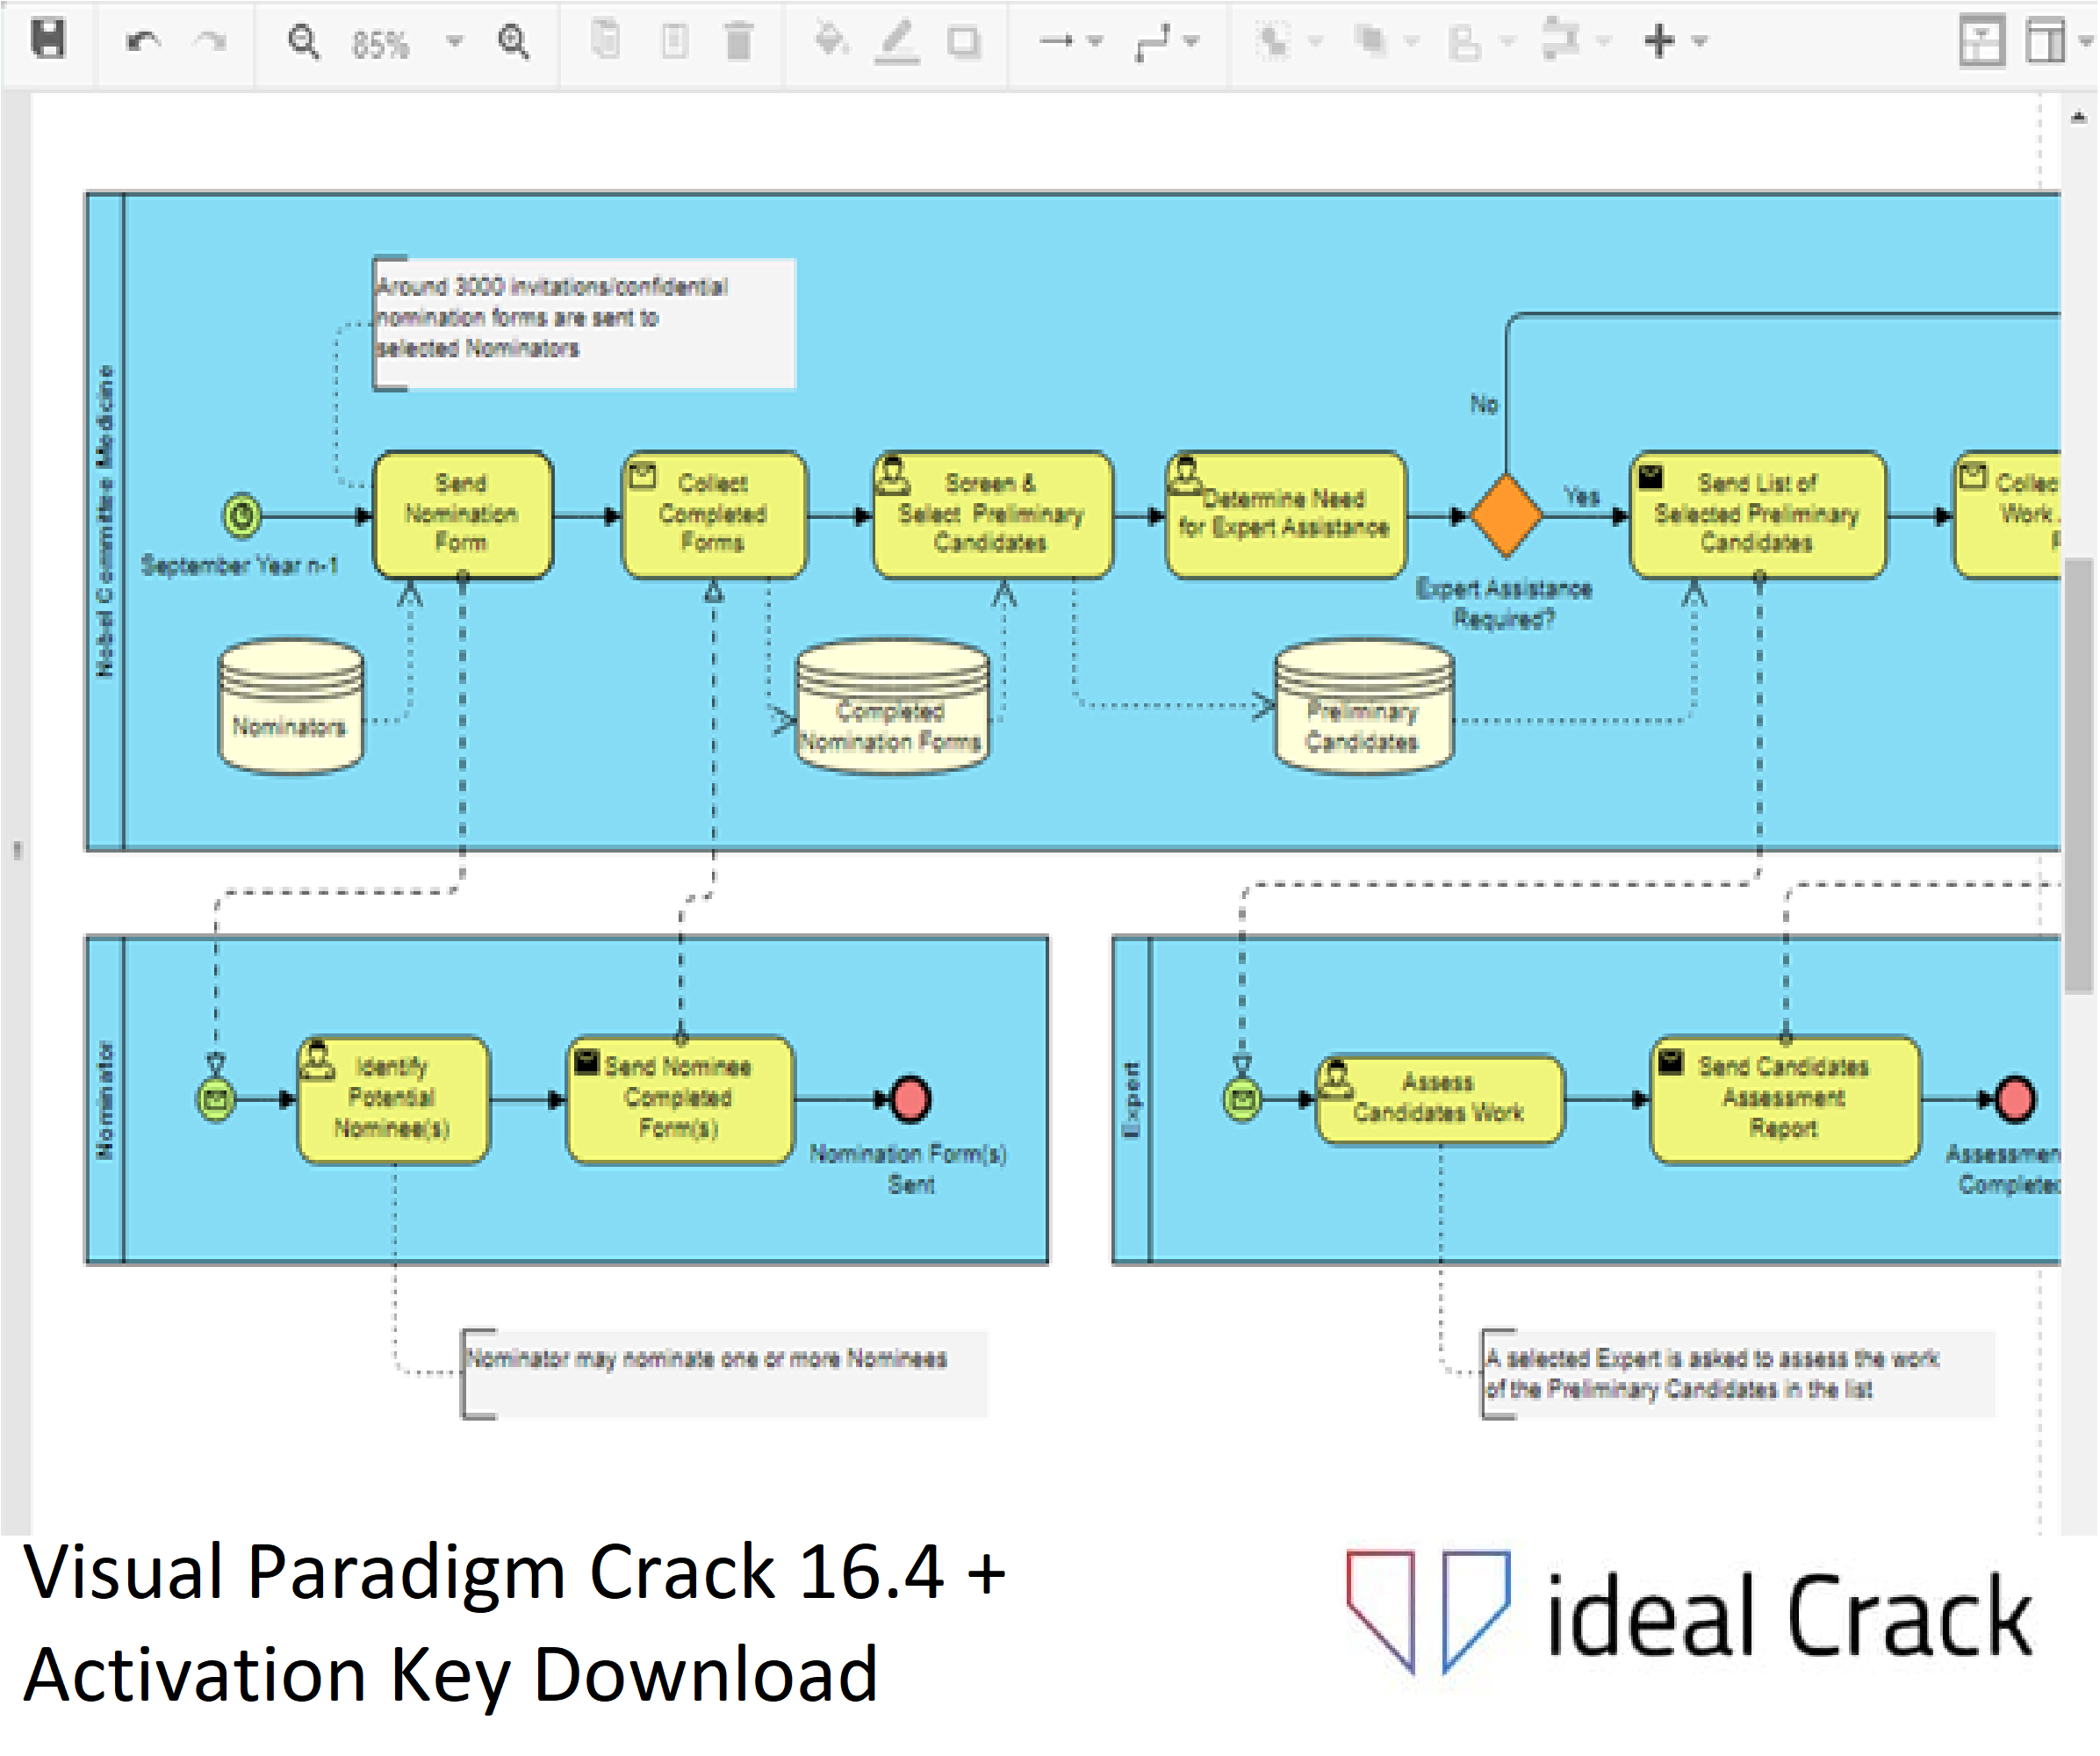 Visual Paradigm Crack 16.4 + Activation Key Download